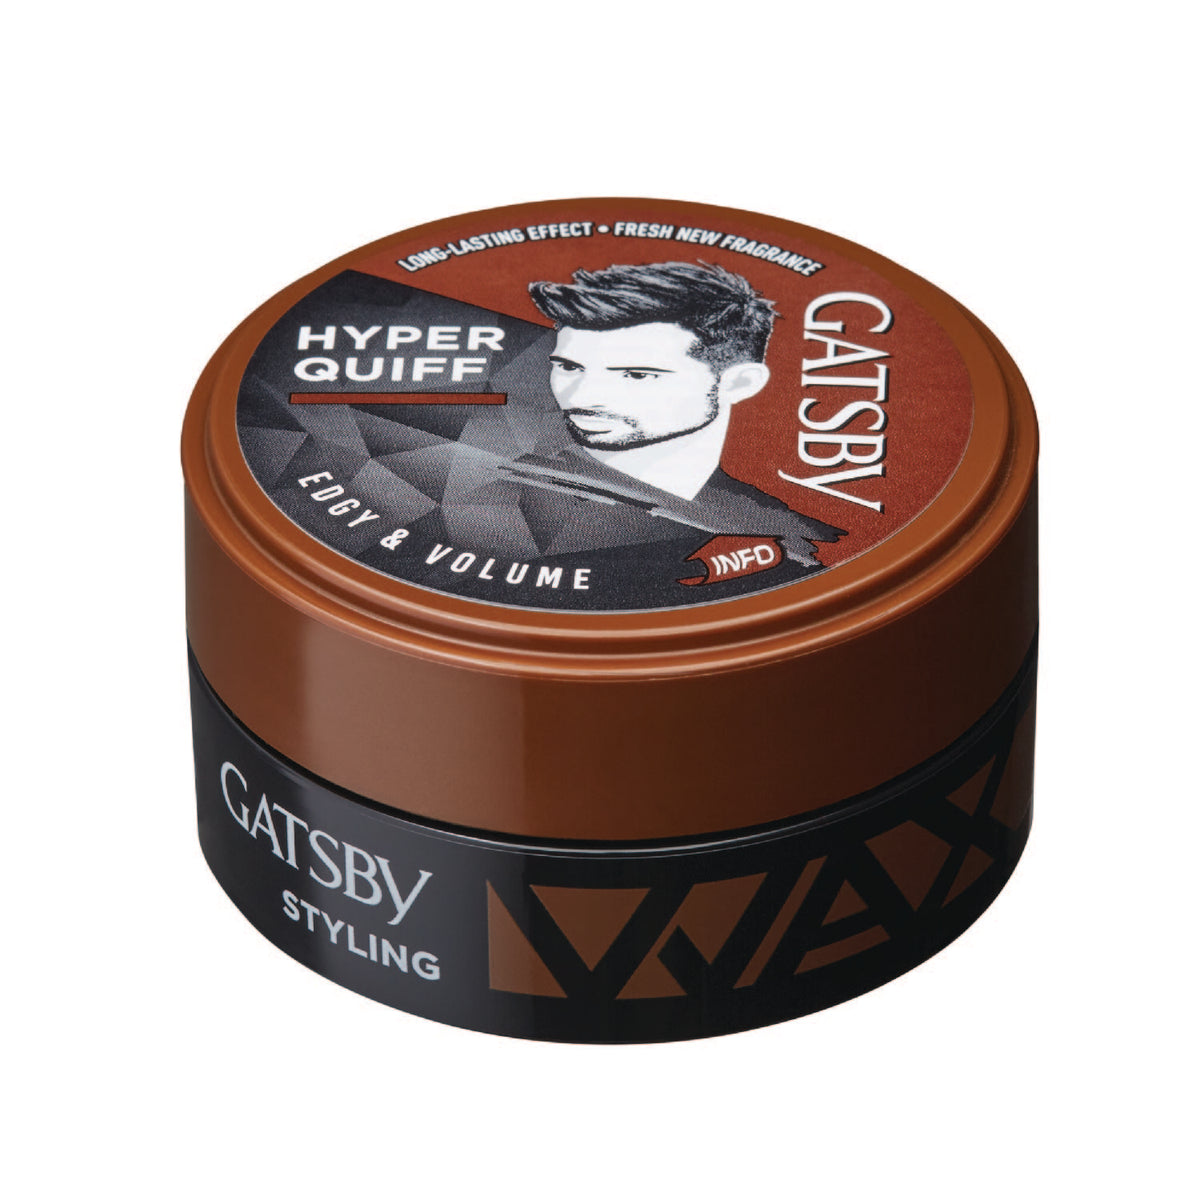 Gatsby Hair Styling Wax - Edgy & Volume, 25g Gardenia Cosmotrade LLP